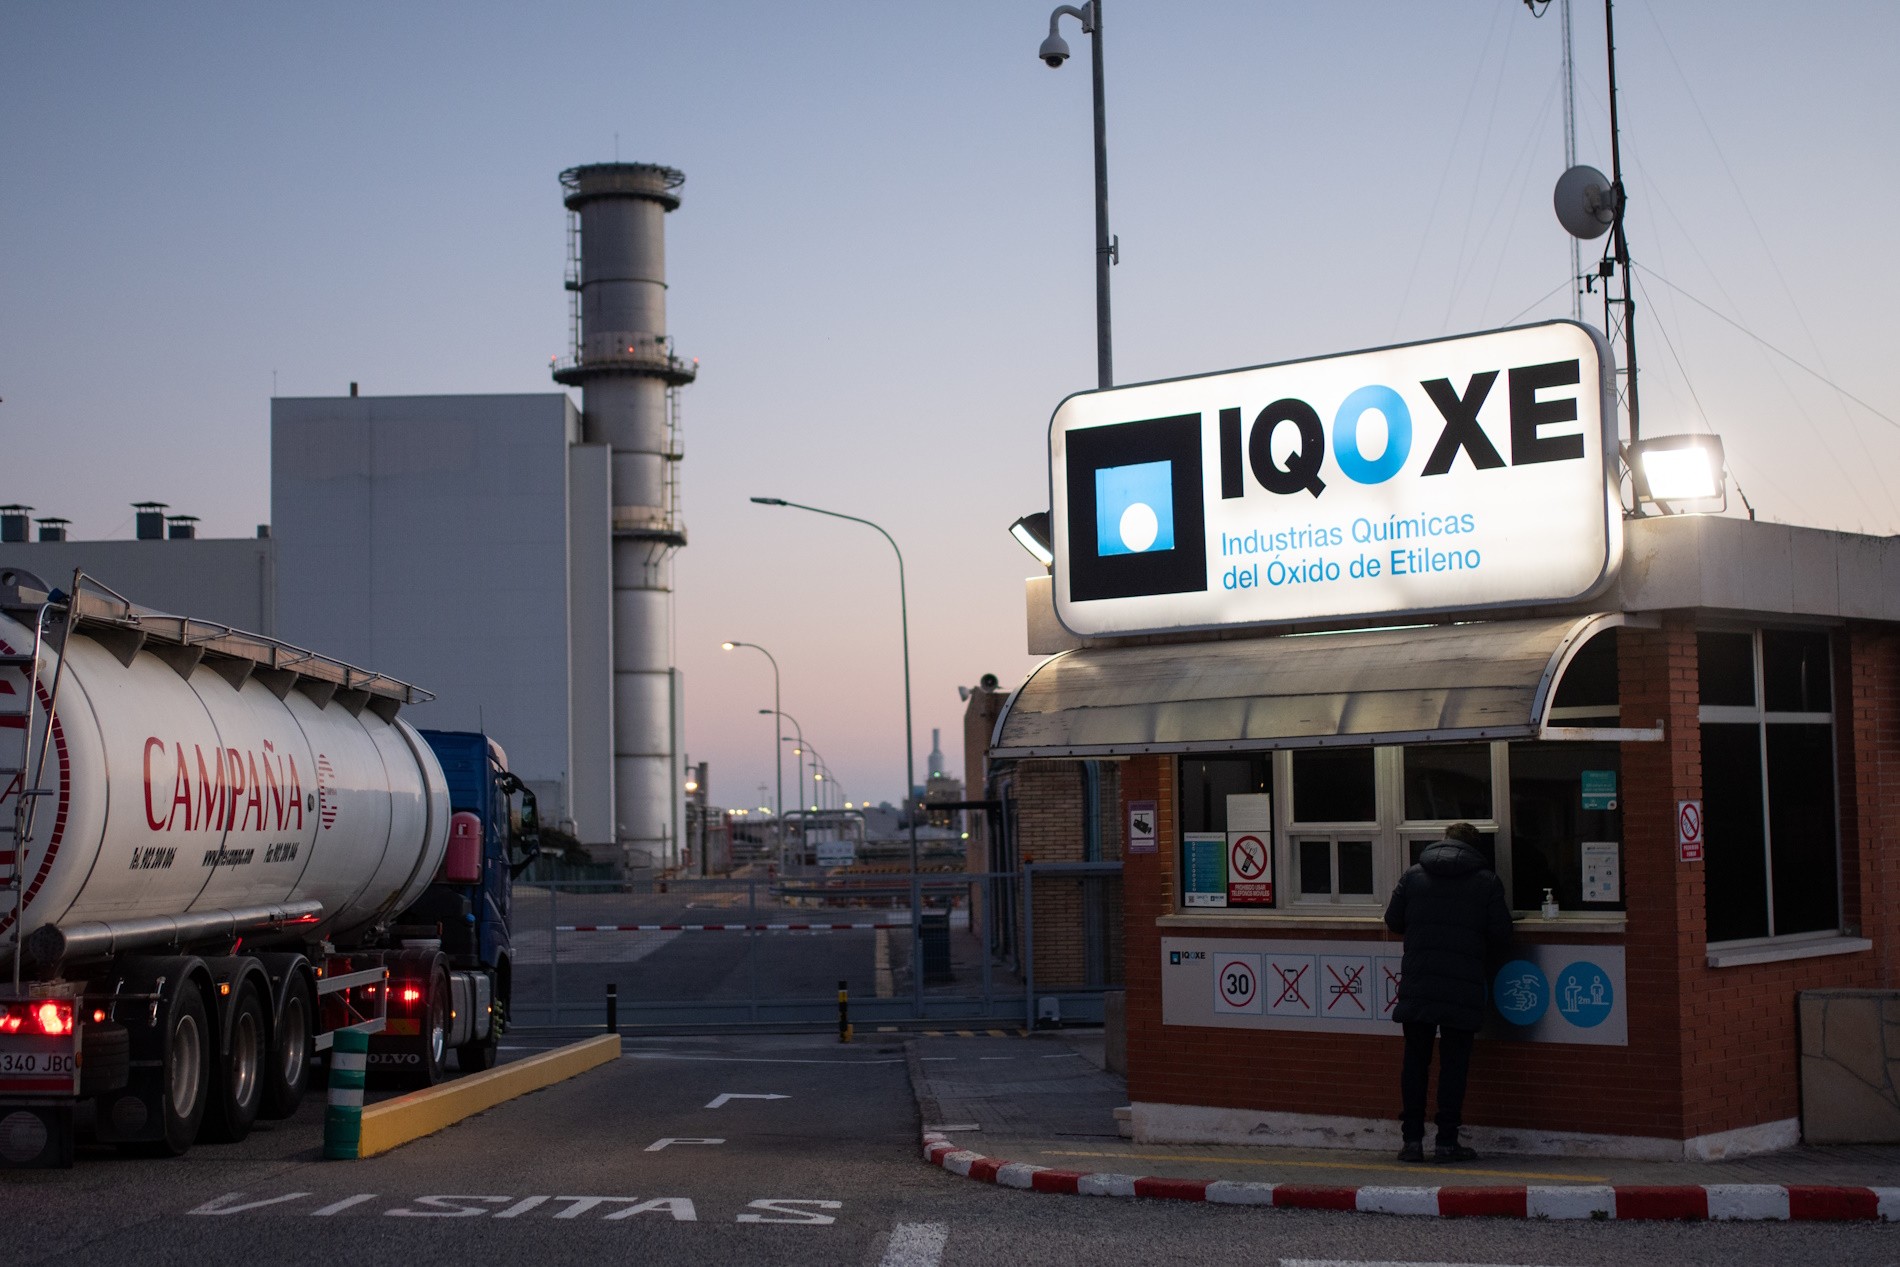 La Agència Catalana de l'Aigua confirma que no hay constancia de que Iqoxe vertiera contaminantes al mar